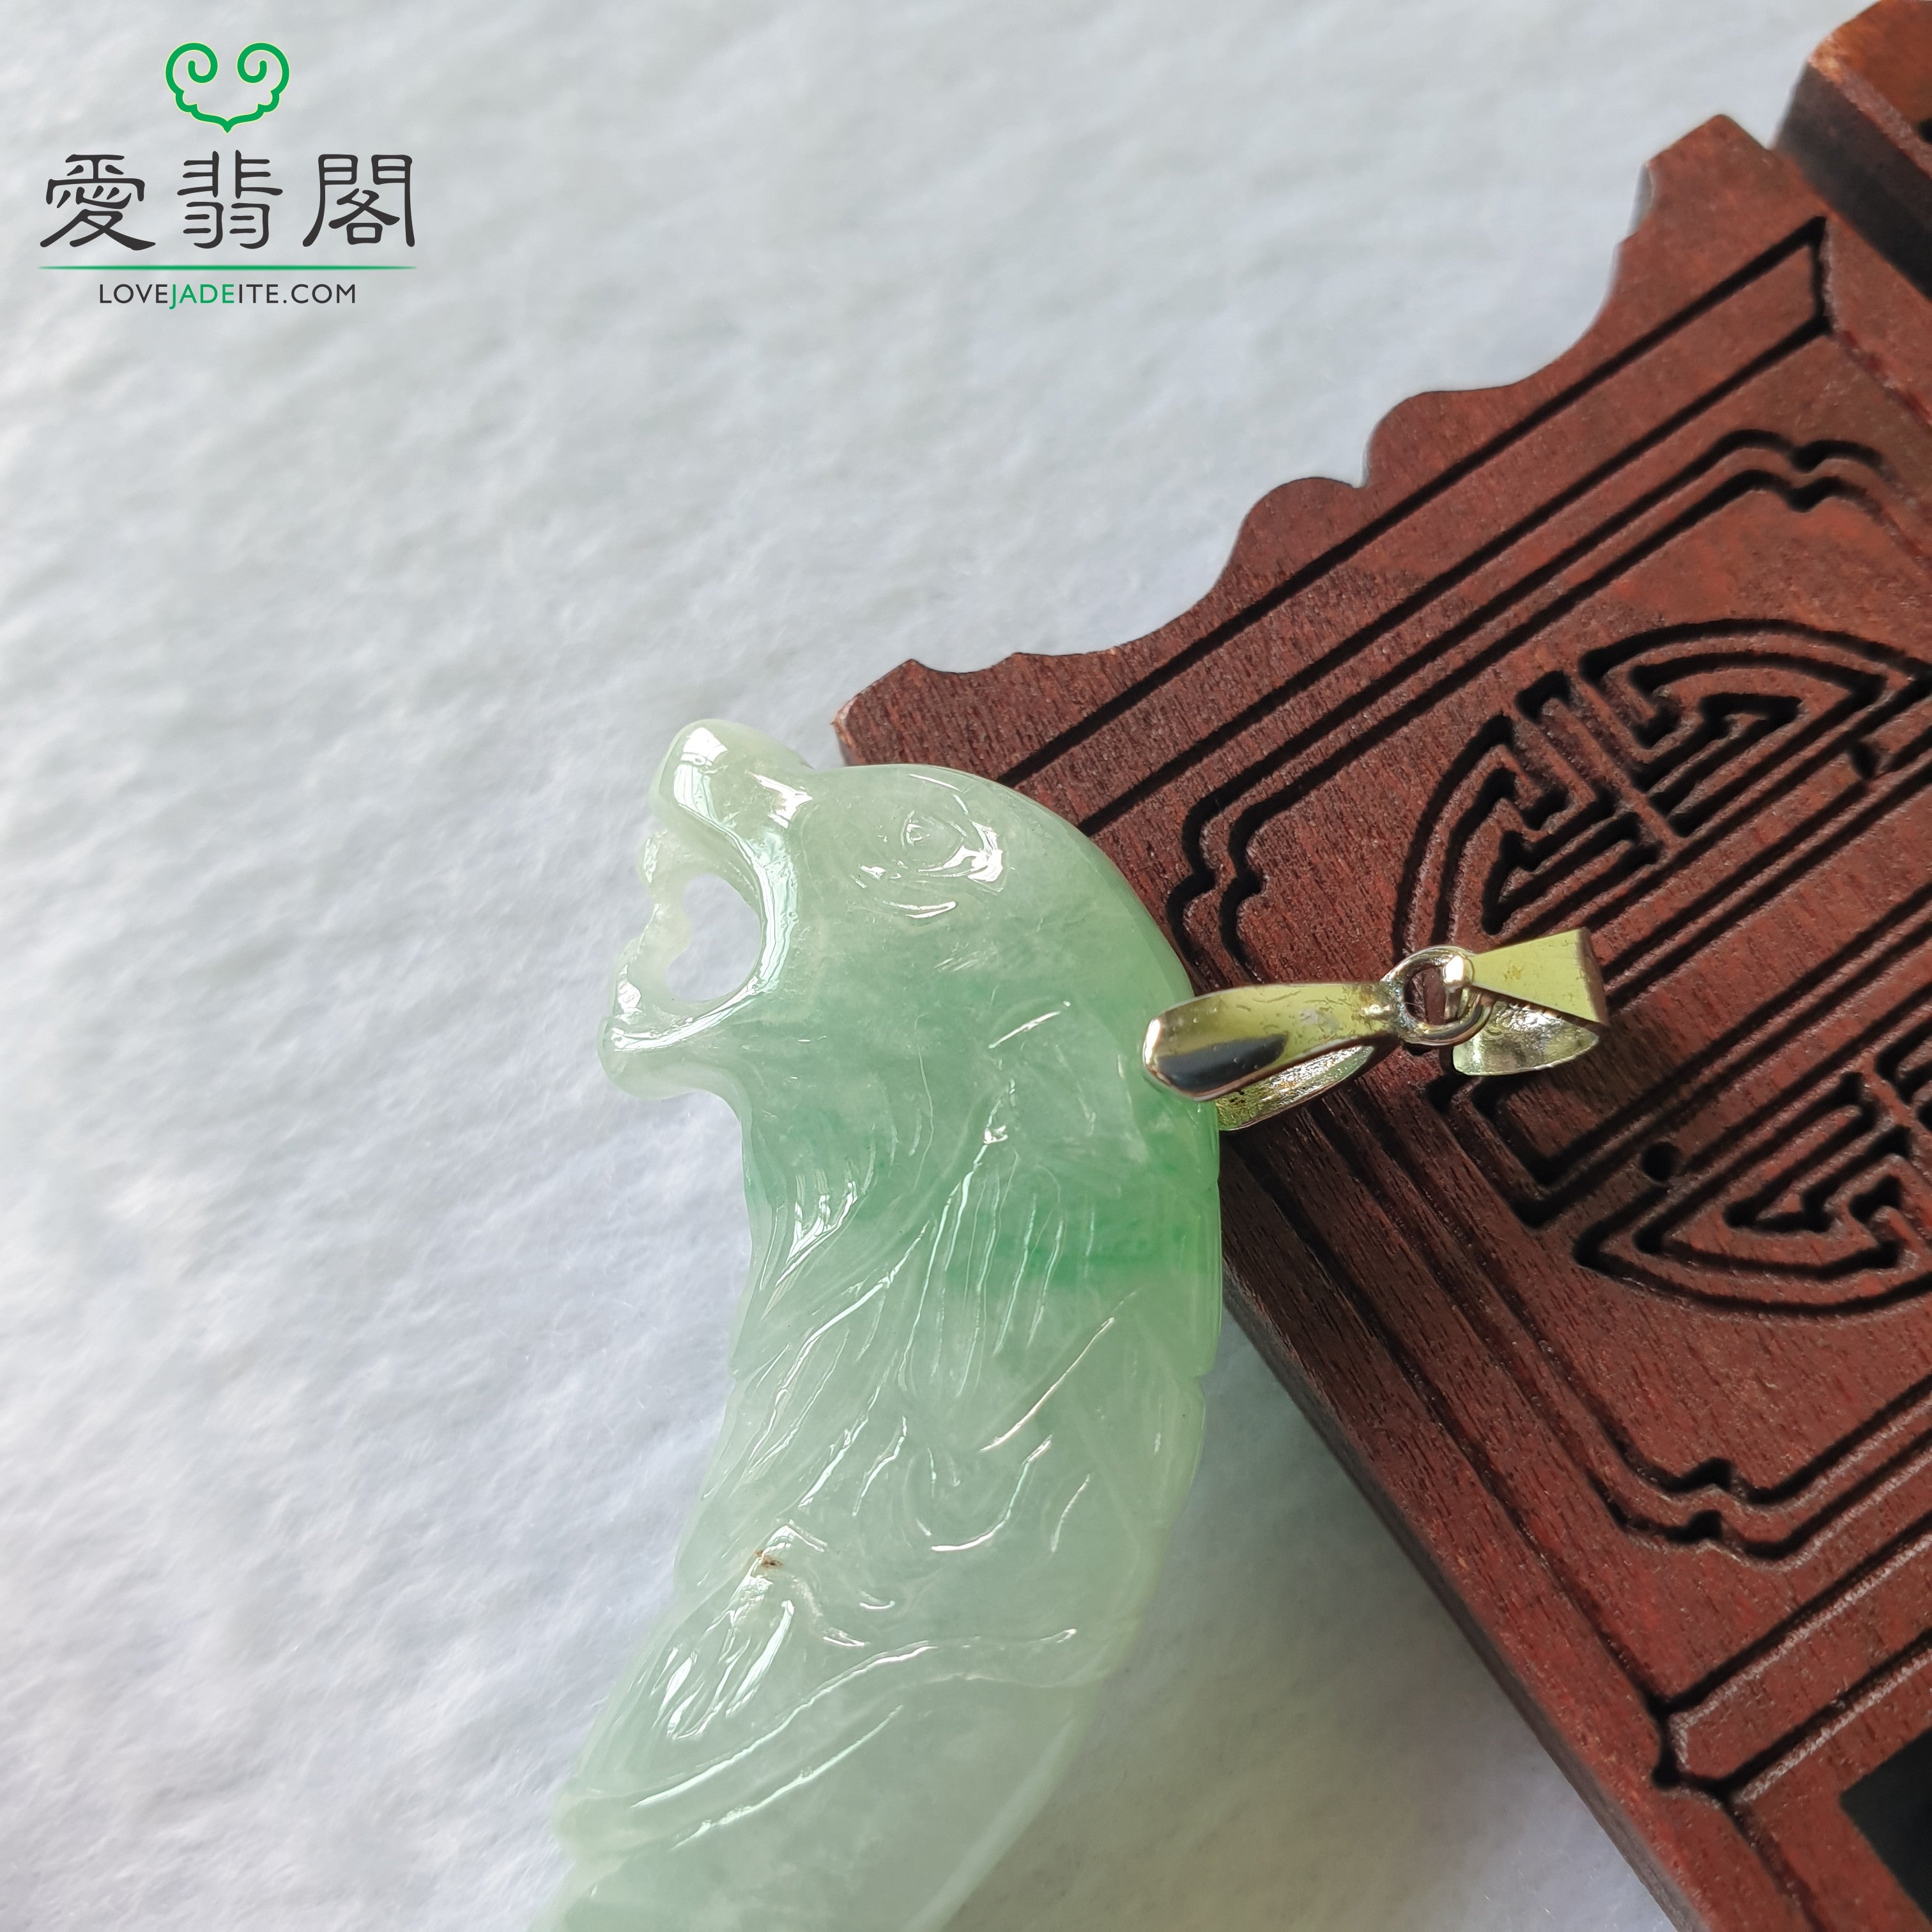 Type A Light Green Jadeite Jade Wolf Tooth Pendant (A货淡绿翡翠狼牙吊坠) PWT49063